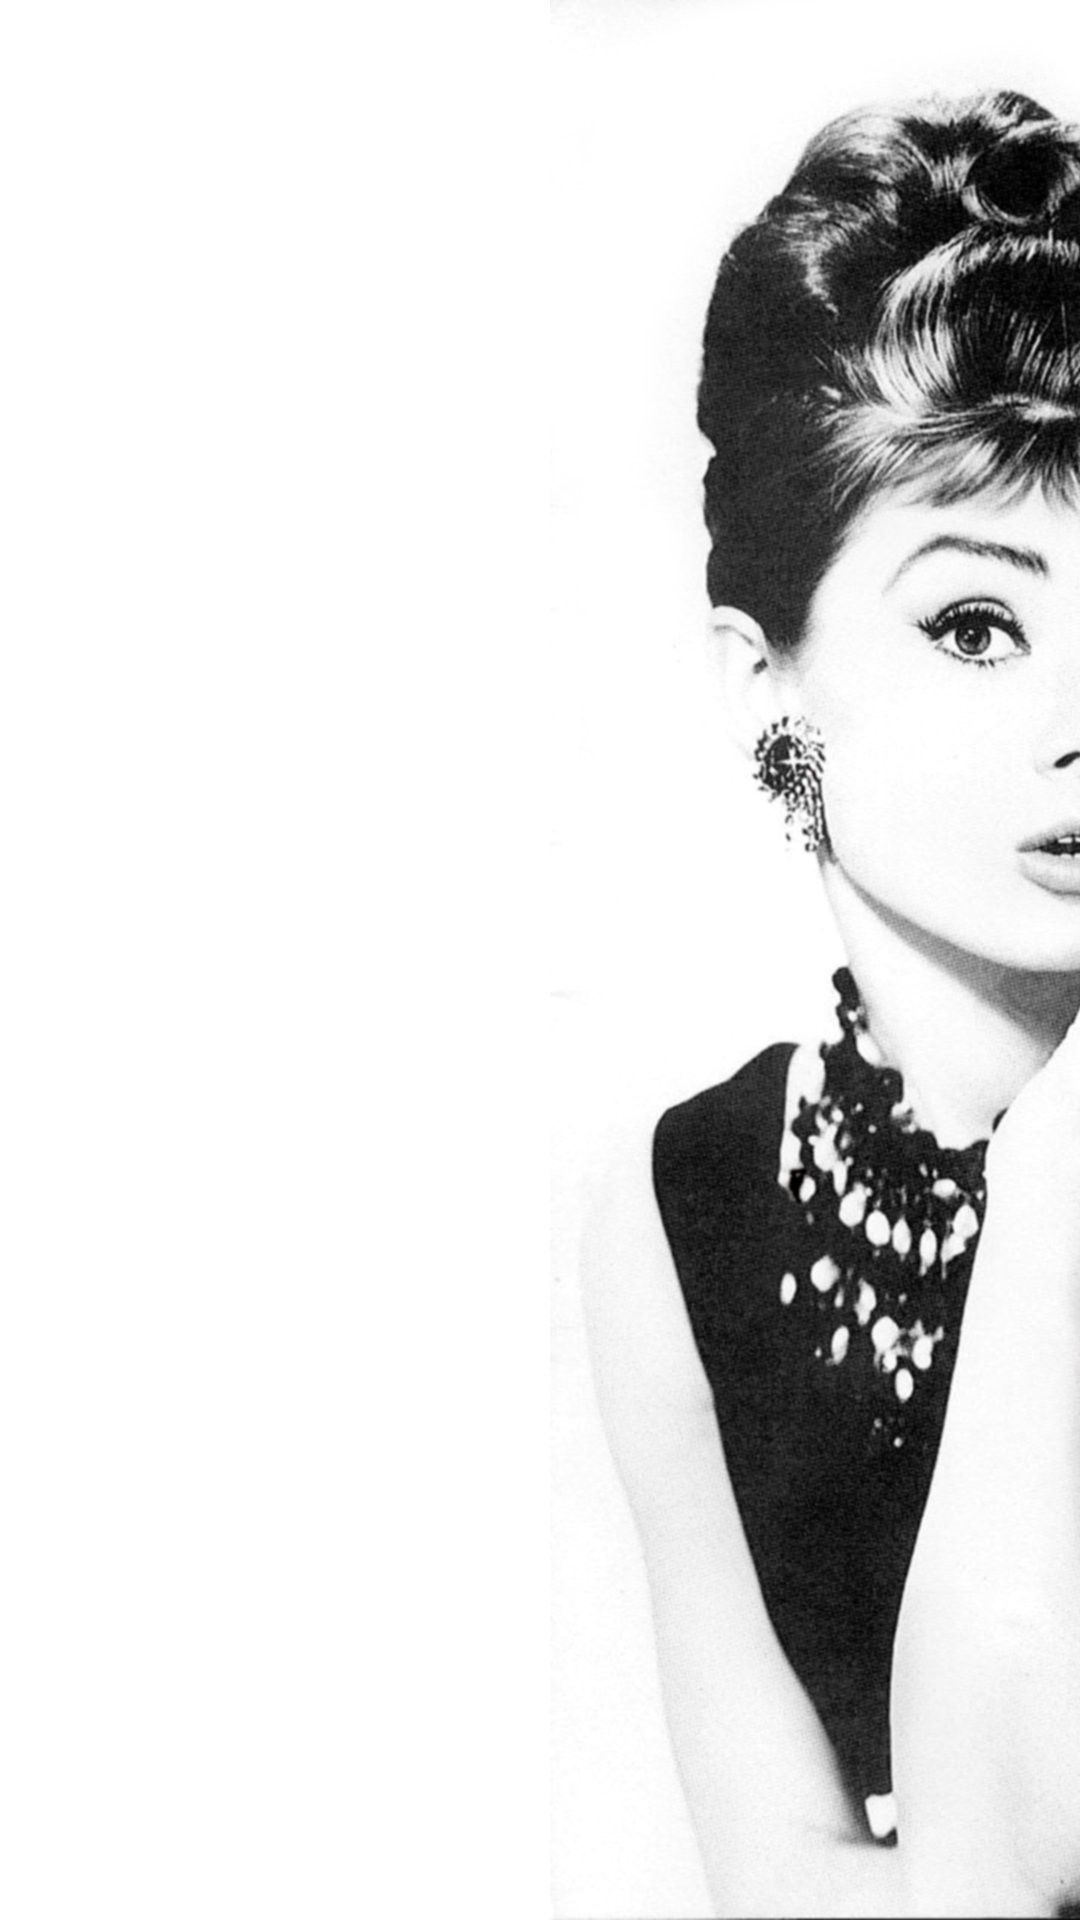 Where to buy Free Audrey Hepburn iPhone 6 Plus Wallpaper 24380 – Celebrities iPhone 6 Plus Wallpapers